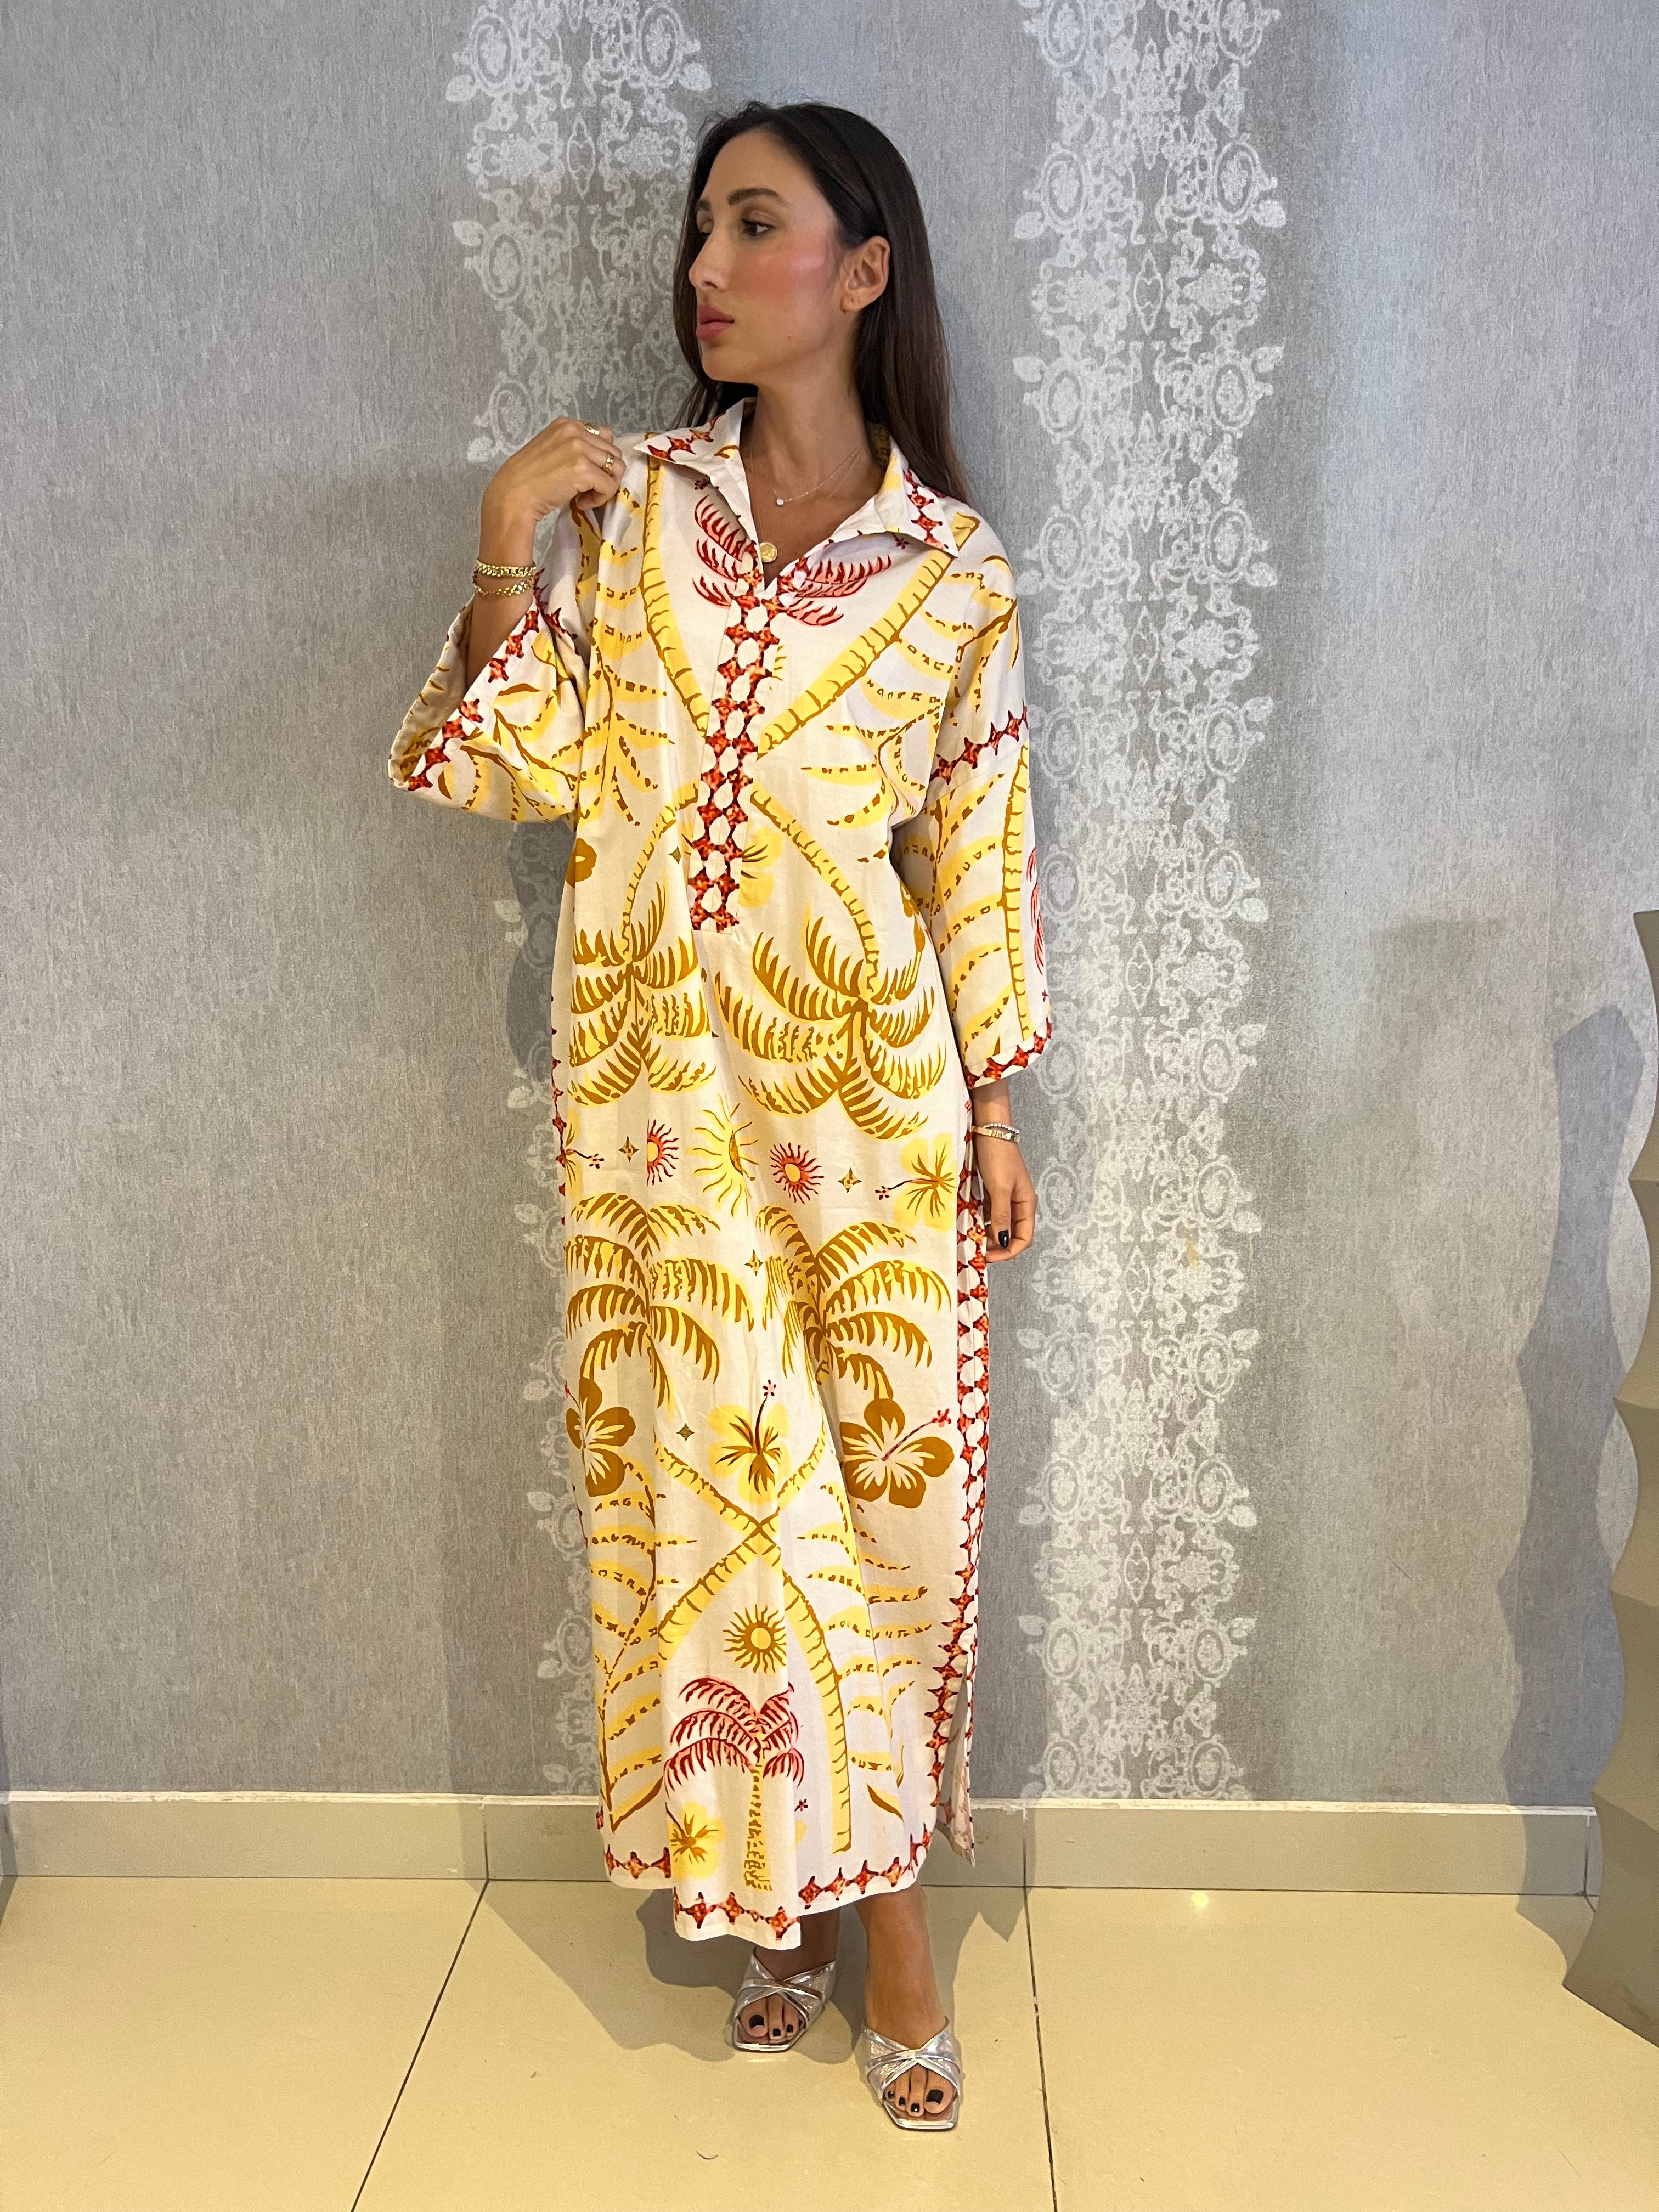 Palma Cotton dress